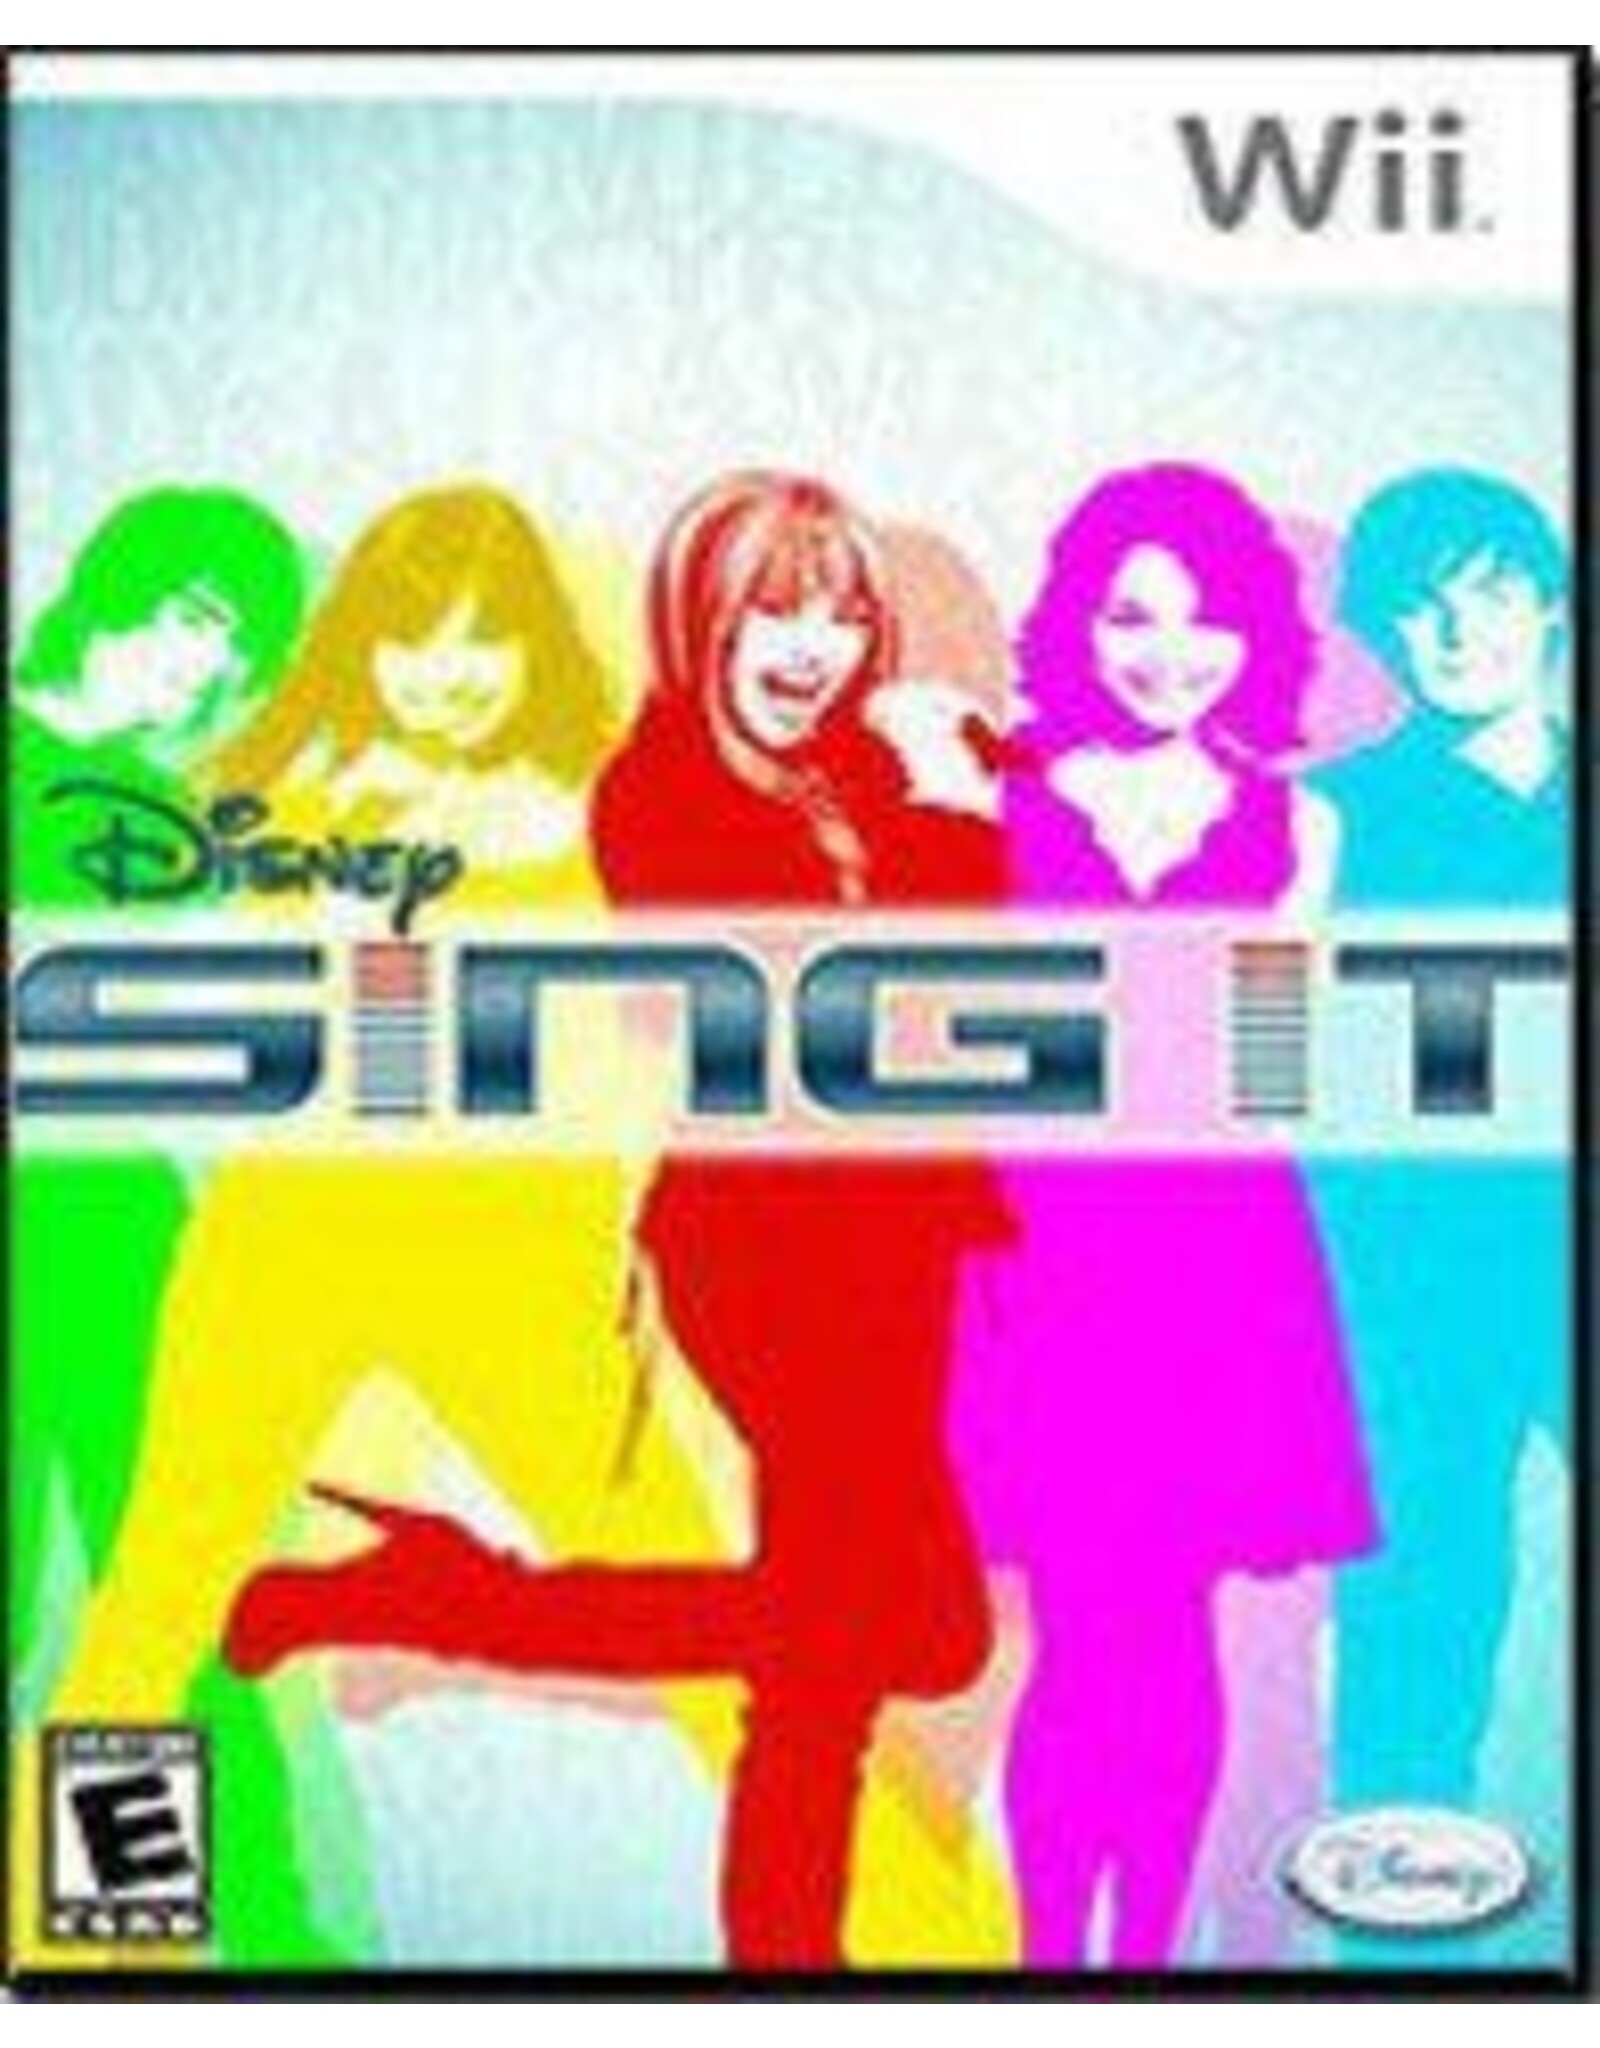 Wii Disney Sing It (CiB)